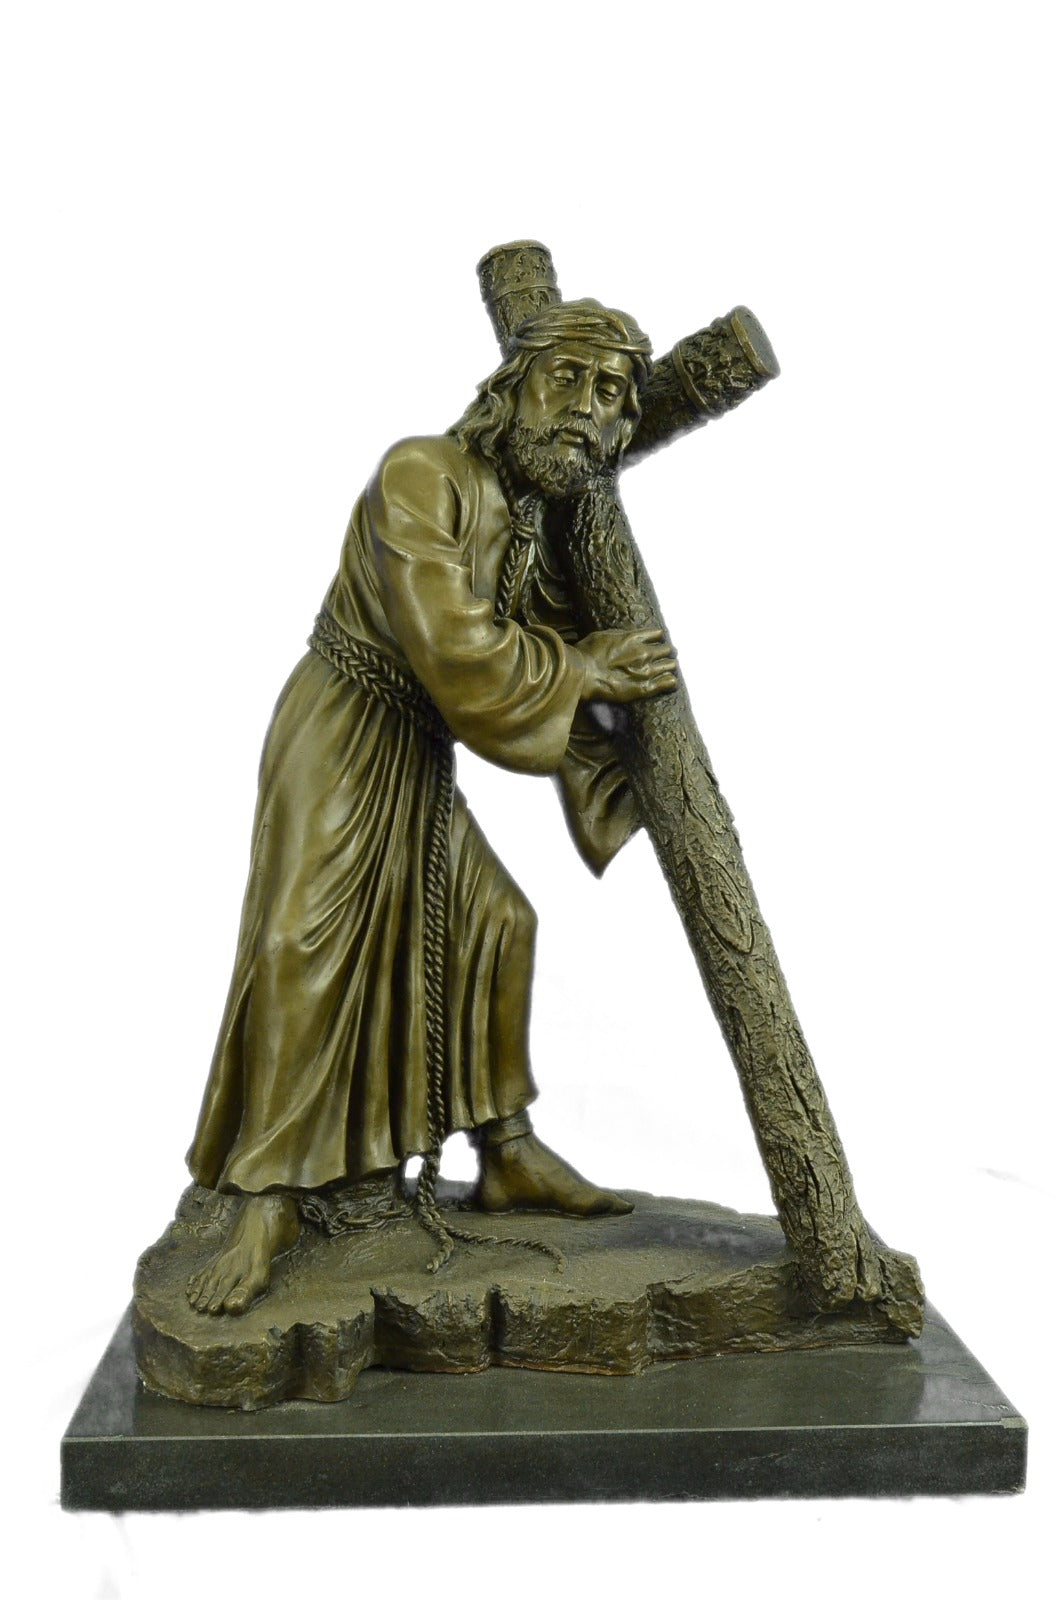 100% Solid Bronze Jesus Christ Church Home Decoration Sculpture Figurine Figure